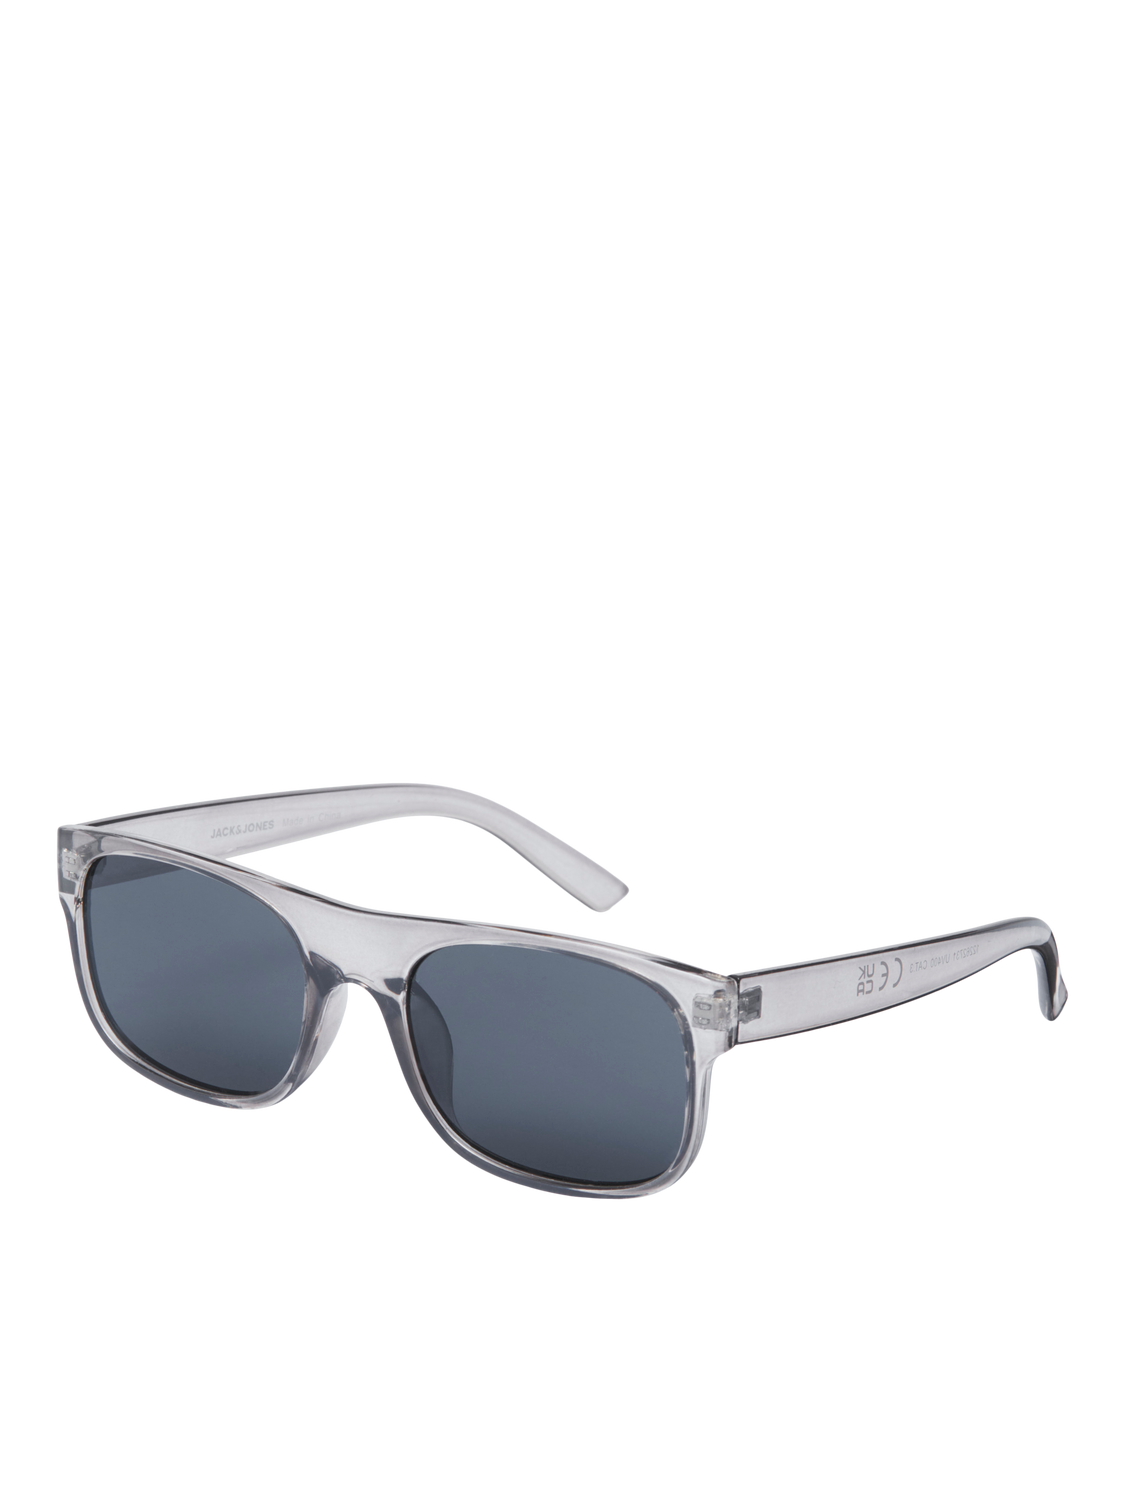 JACSIMON Sunglasses - Light Grey Denim